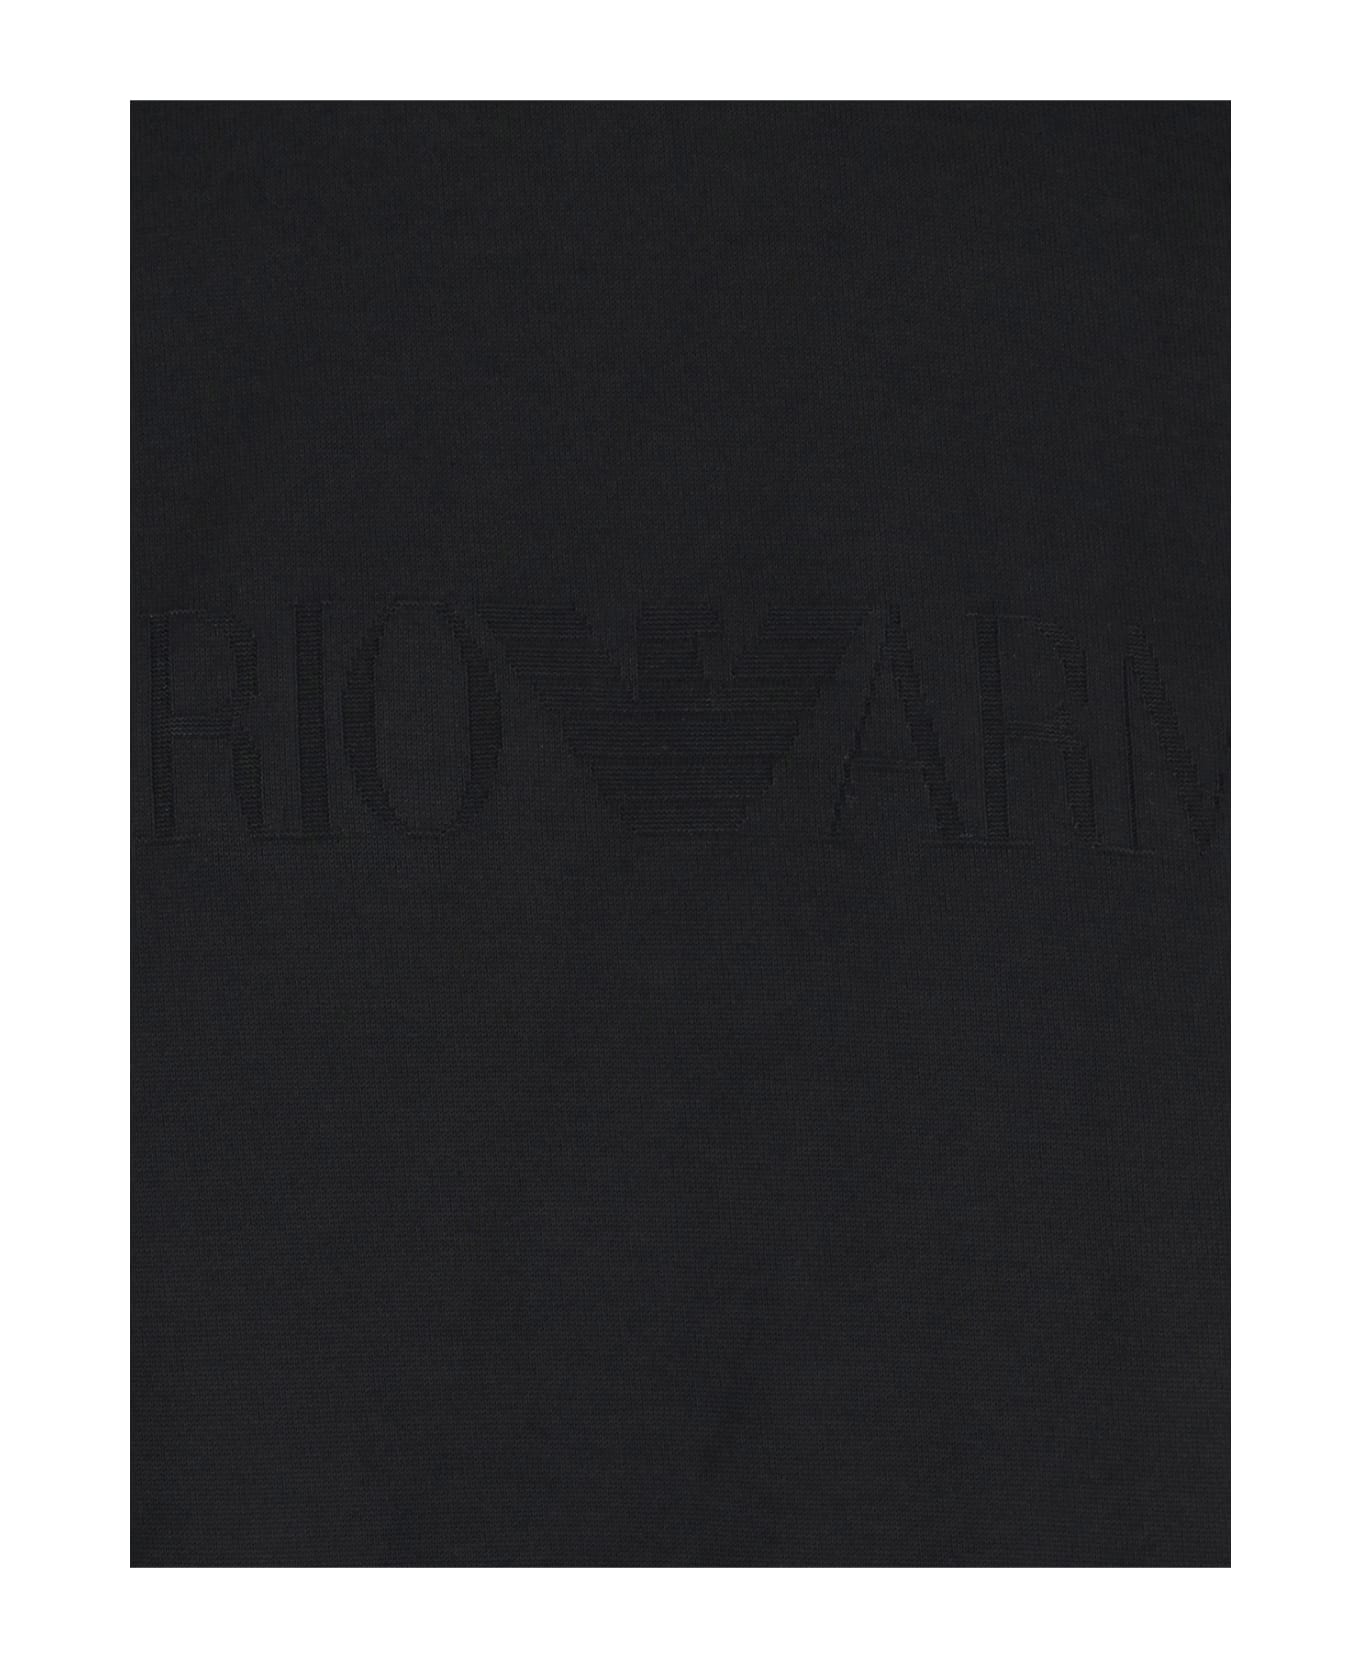 Emporio Armani Logo T-shirt - BLACK